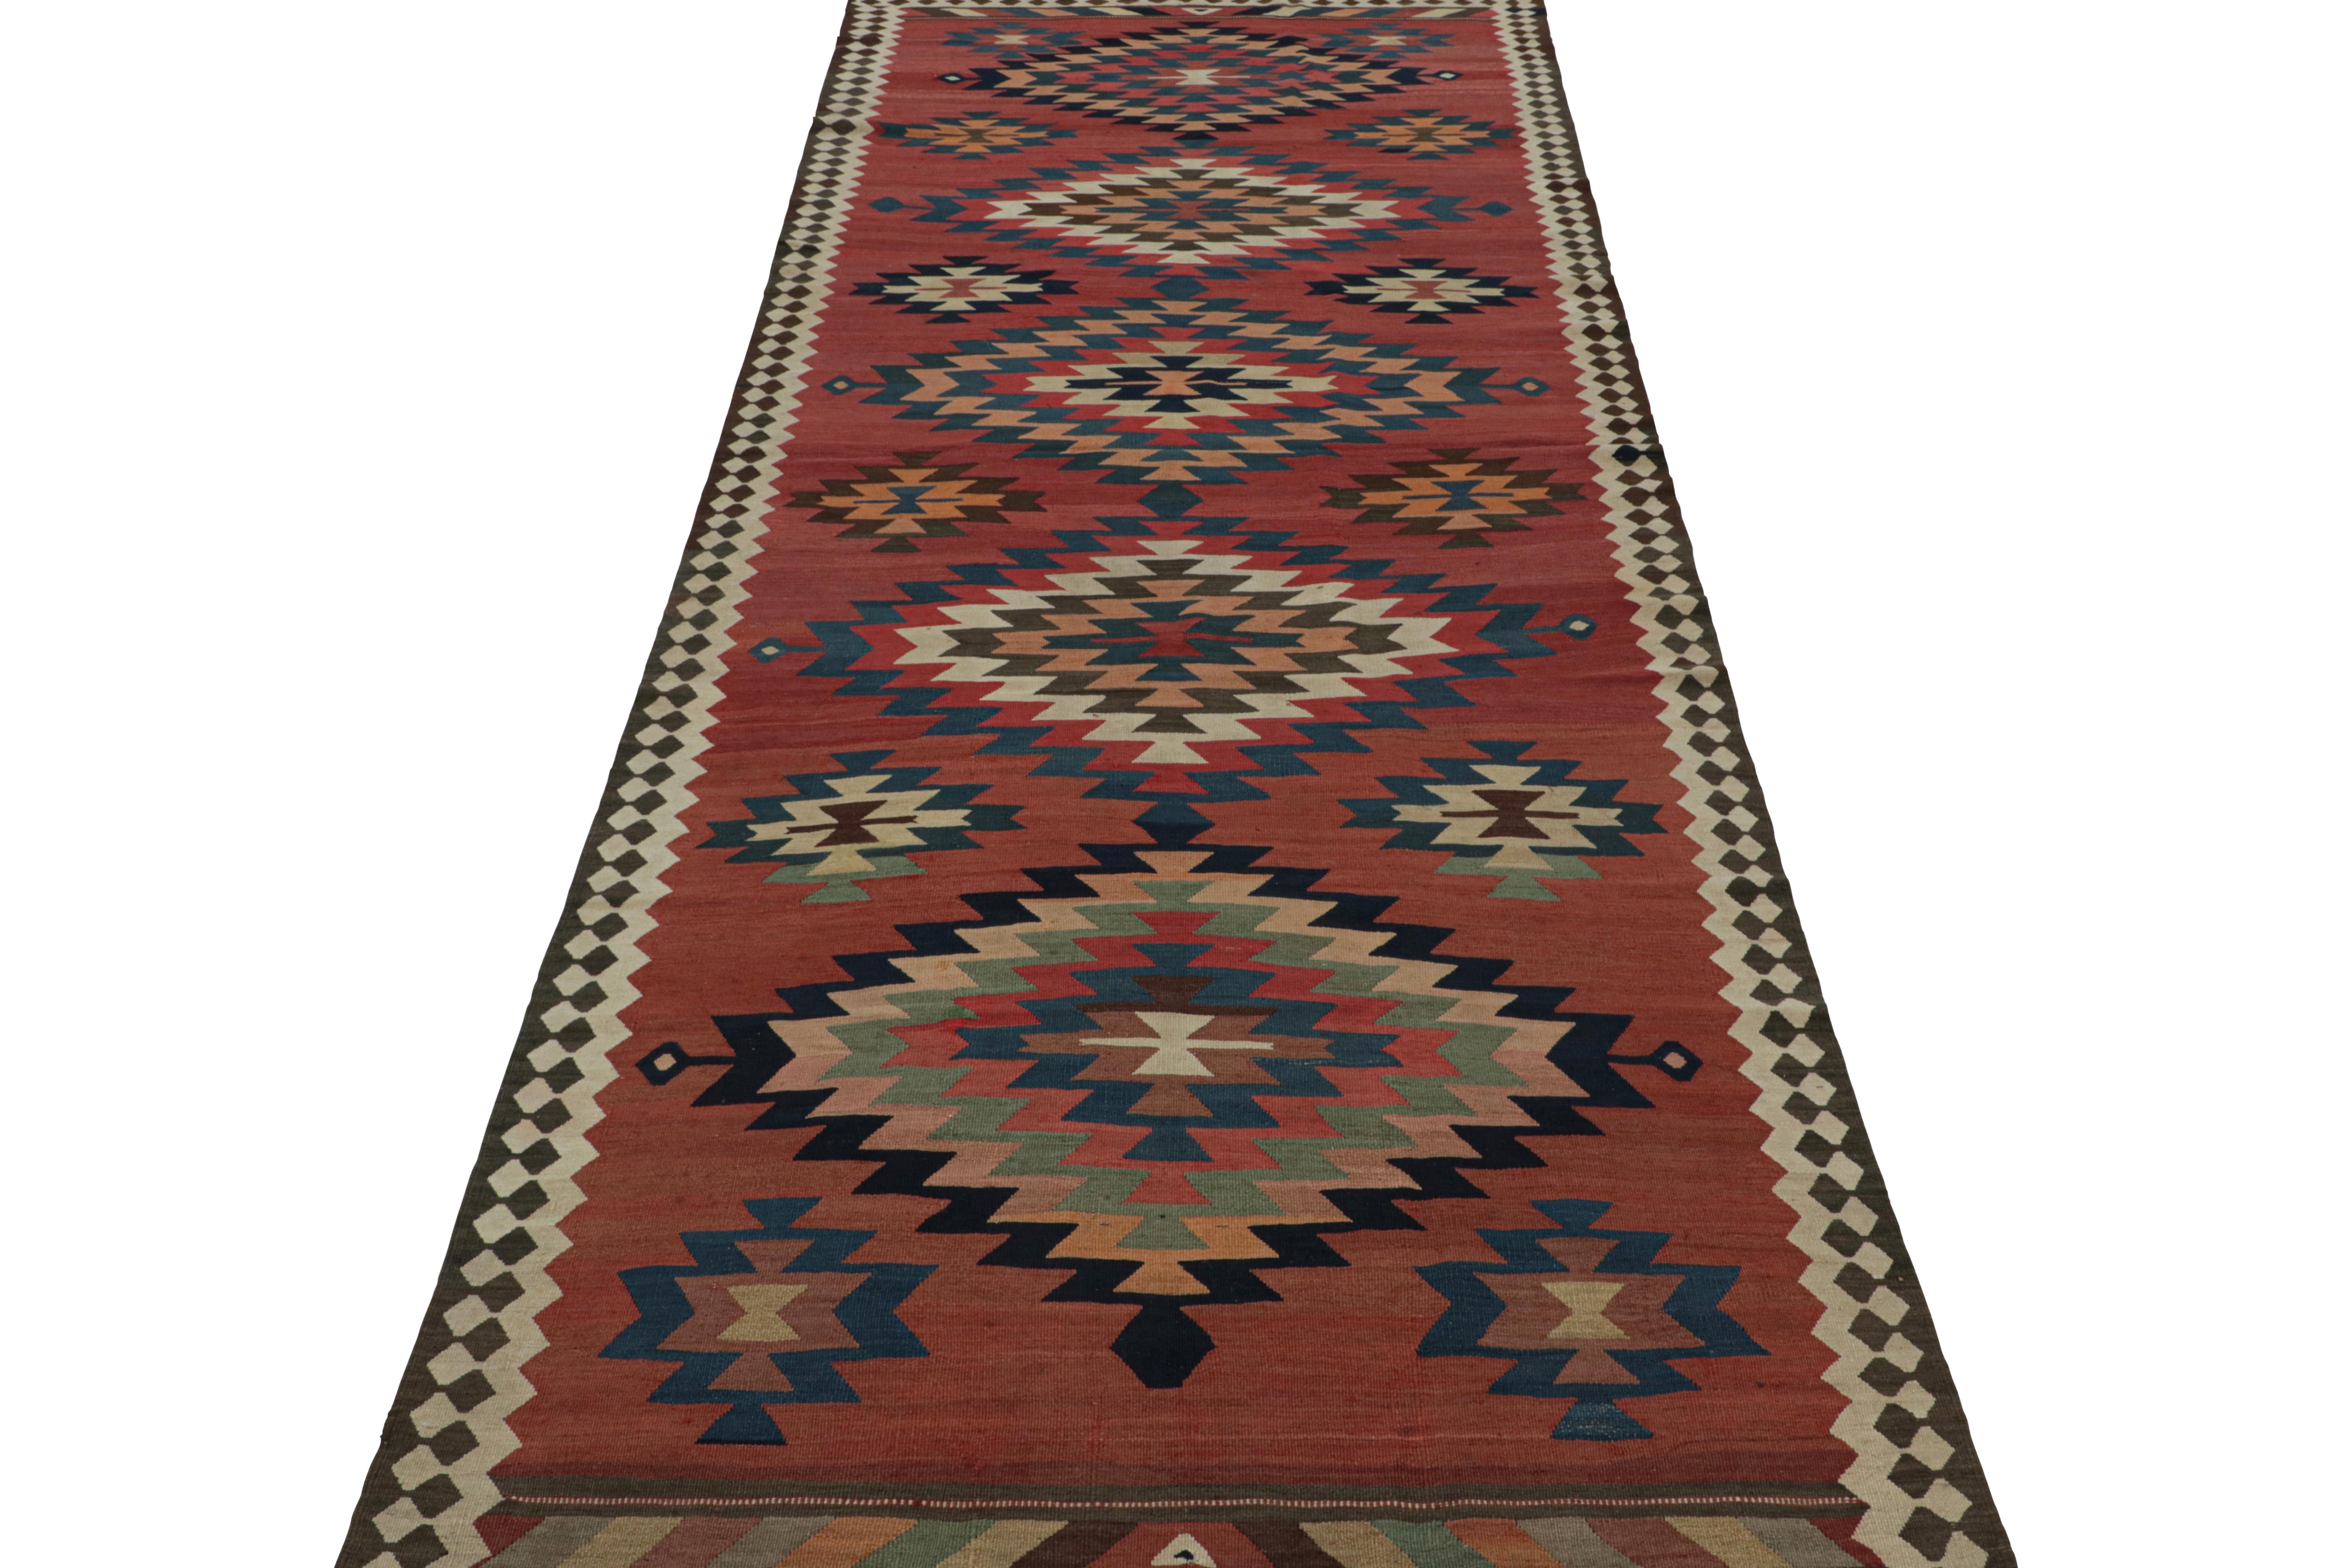 Tribal  Vintage Afghani tribal Kilim rug, with Large Medallions, from Rug & Kilim For Sale